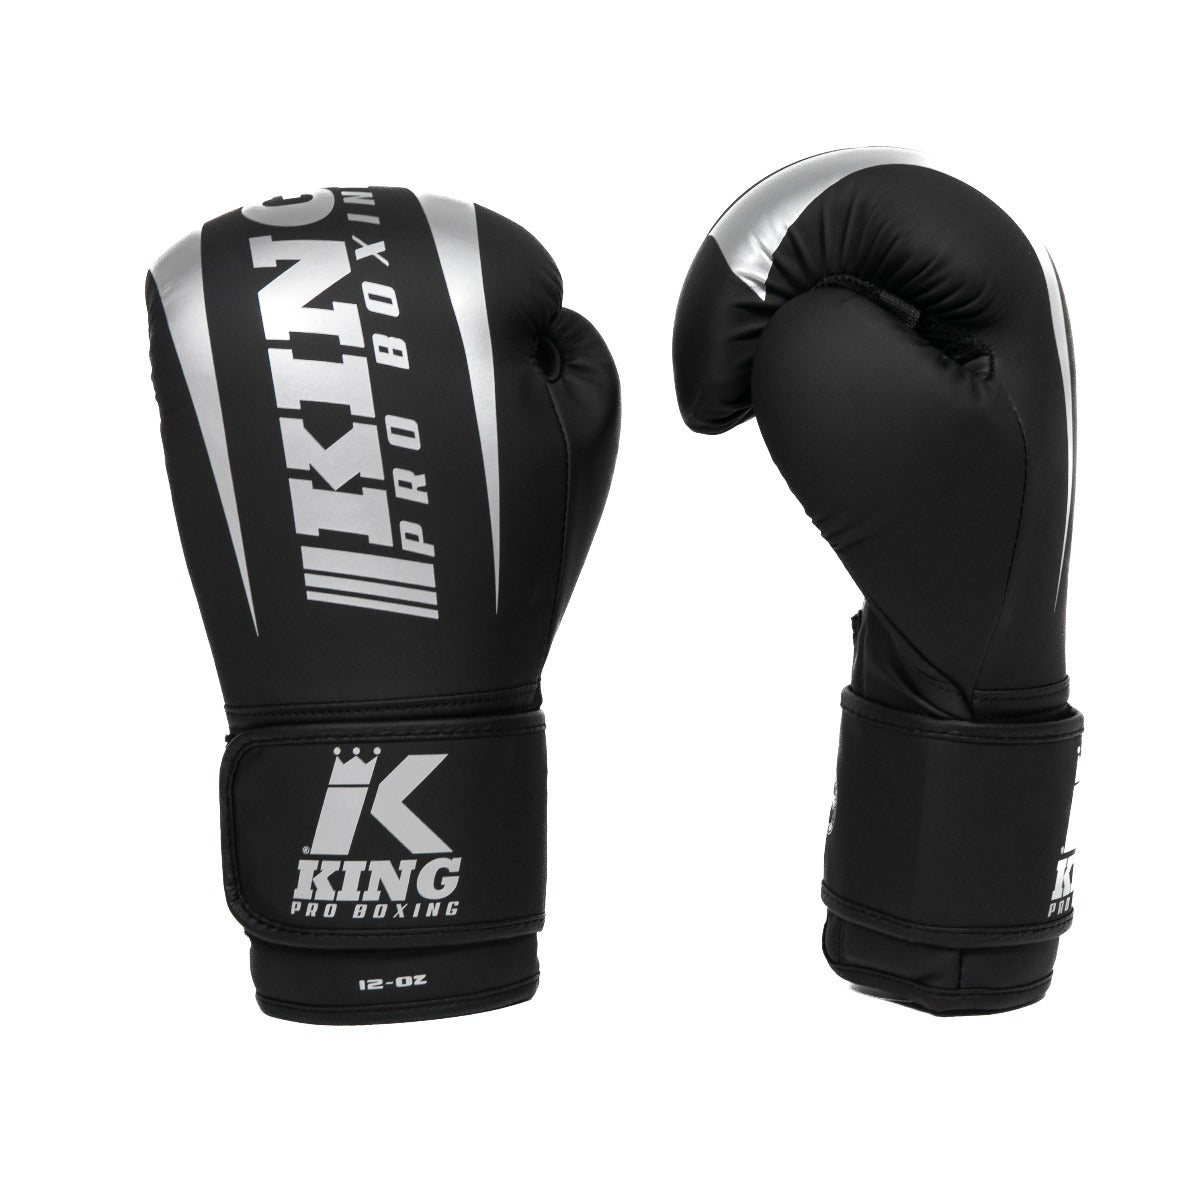 King PRO boxing boxing gloves - REVO 7